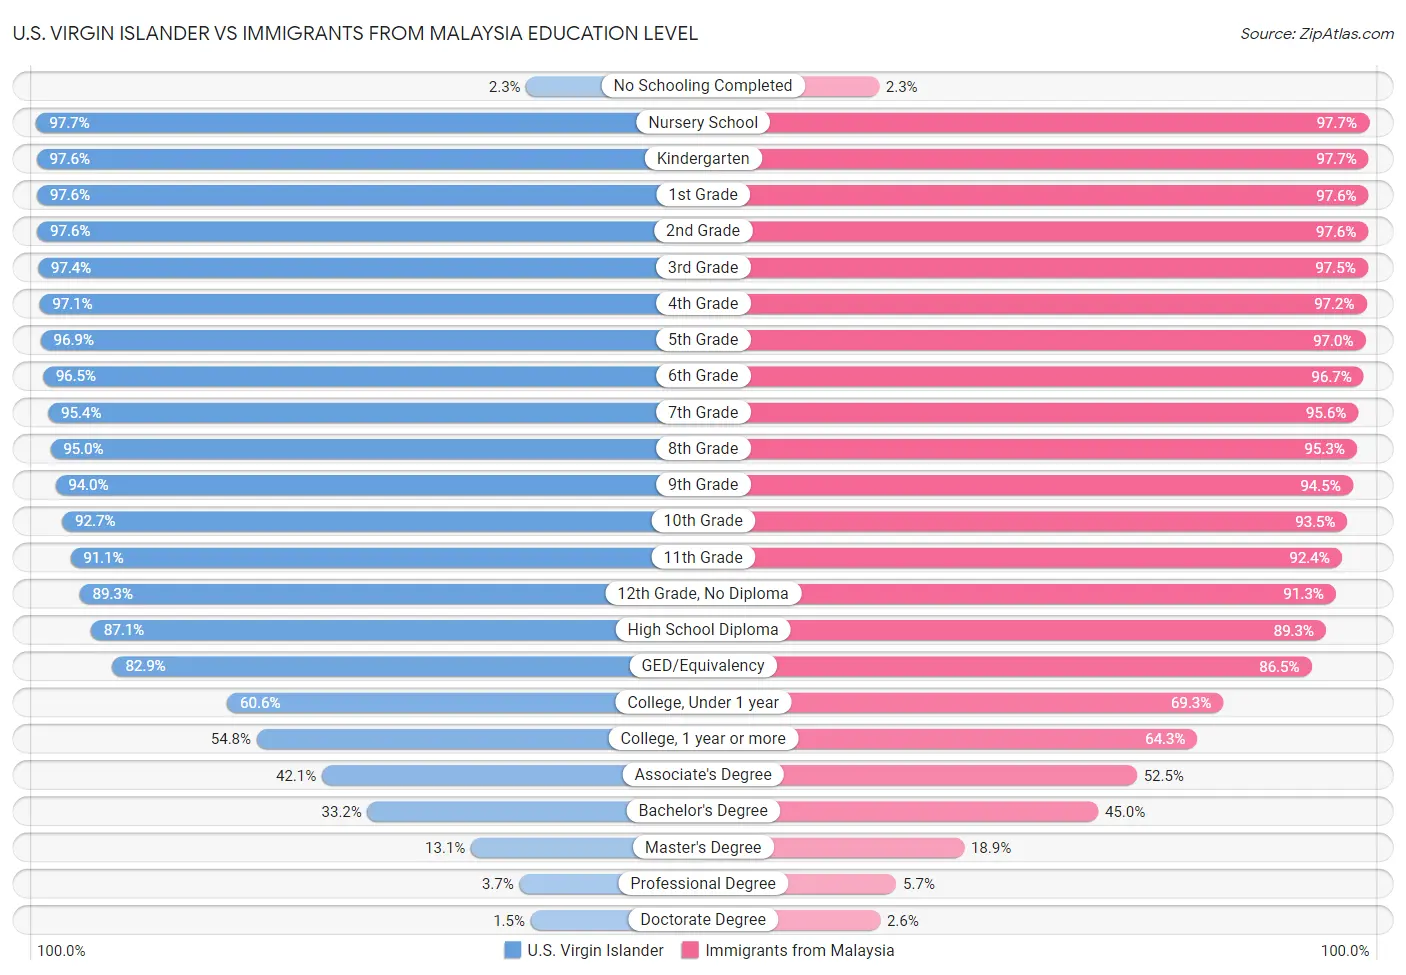 U.S. Virgin Islander vs Immigrants from Malaysia Education Level